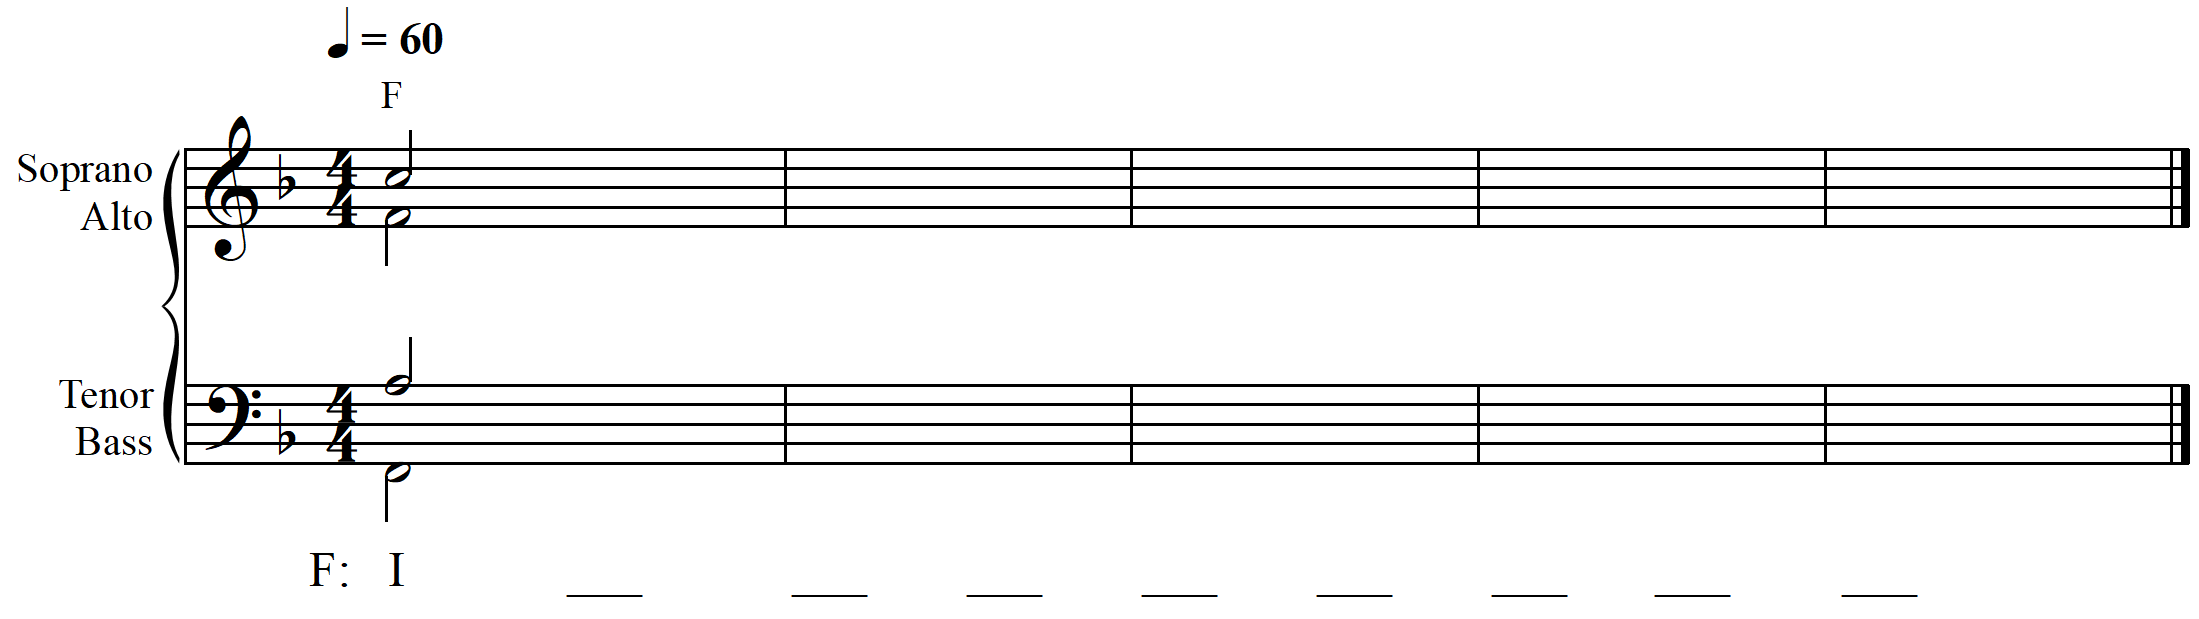 melodic dictation simple meter intermediate example 6